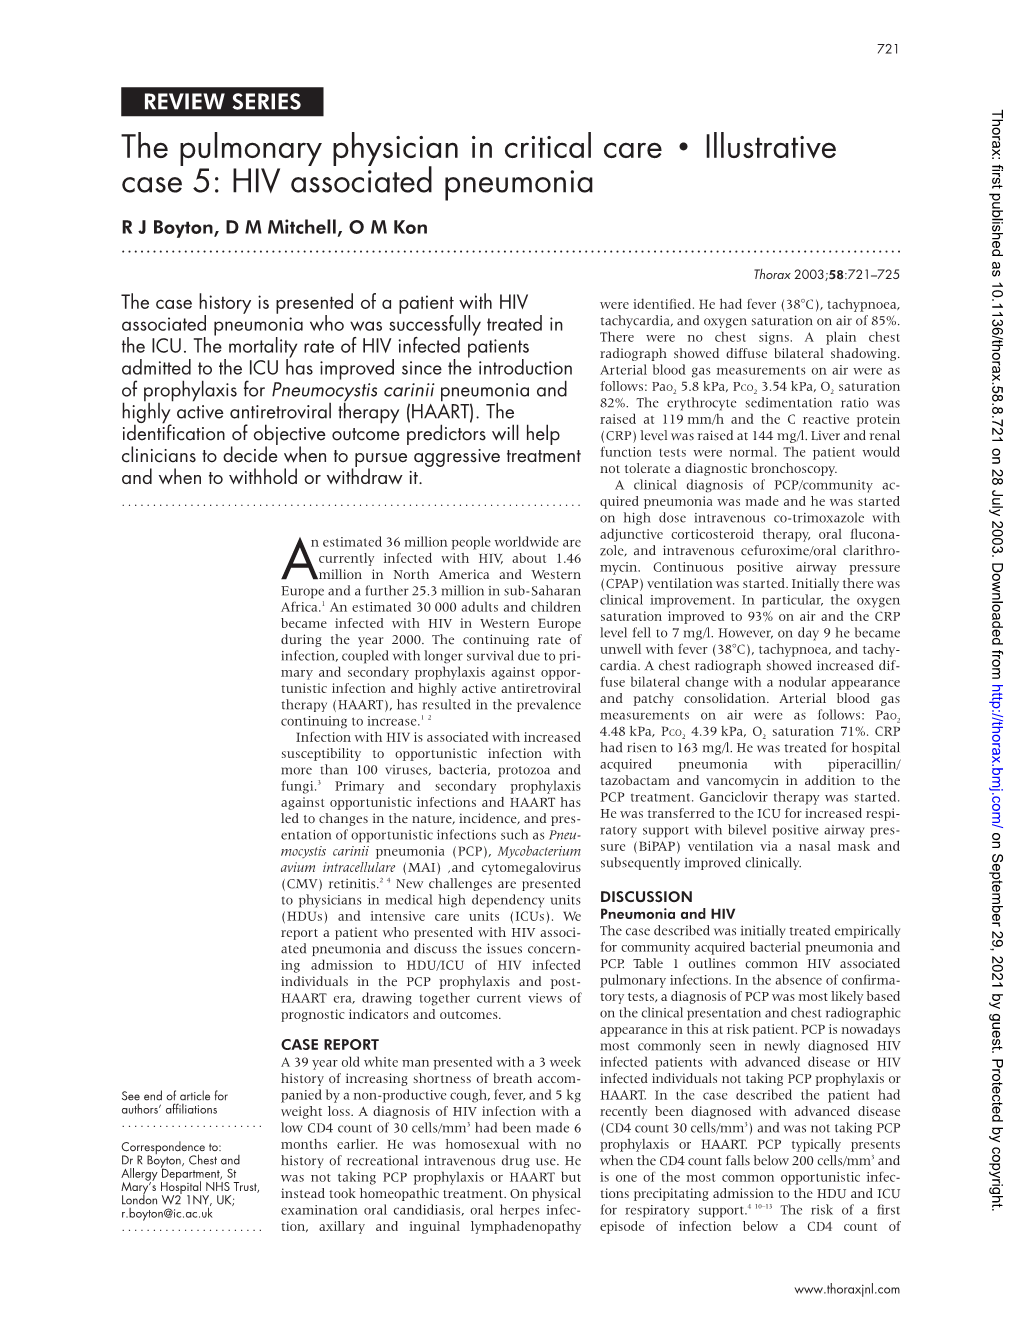 HIV Associated Pneumonia R J Boyton, D M Mitchell,Omkon